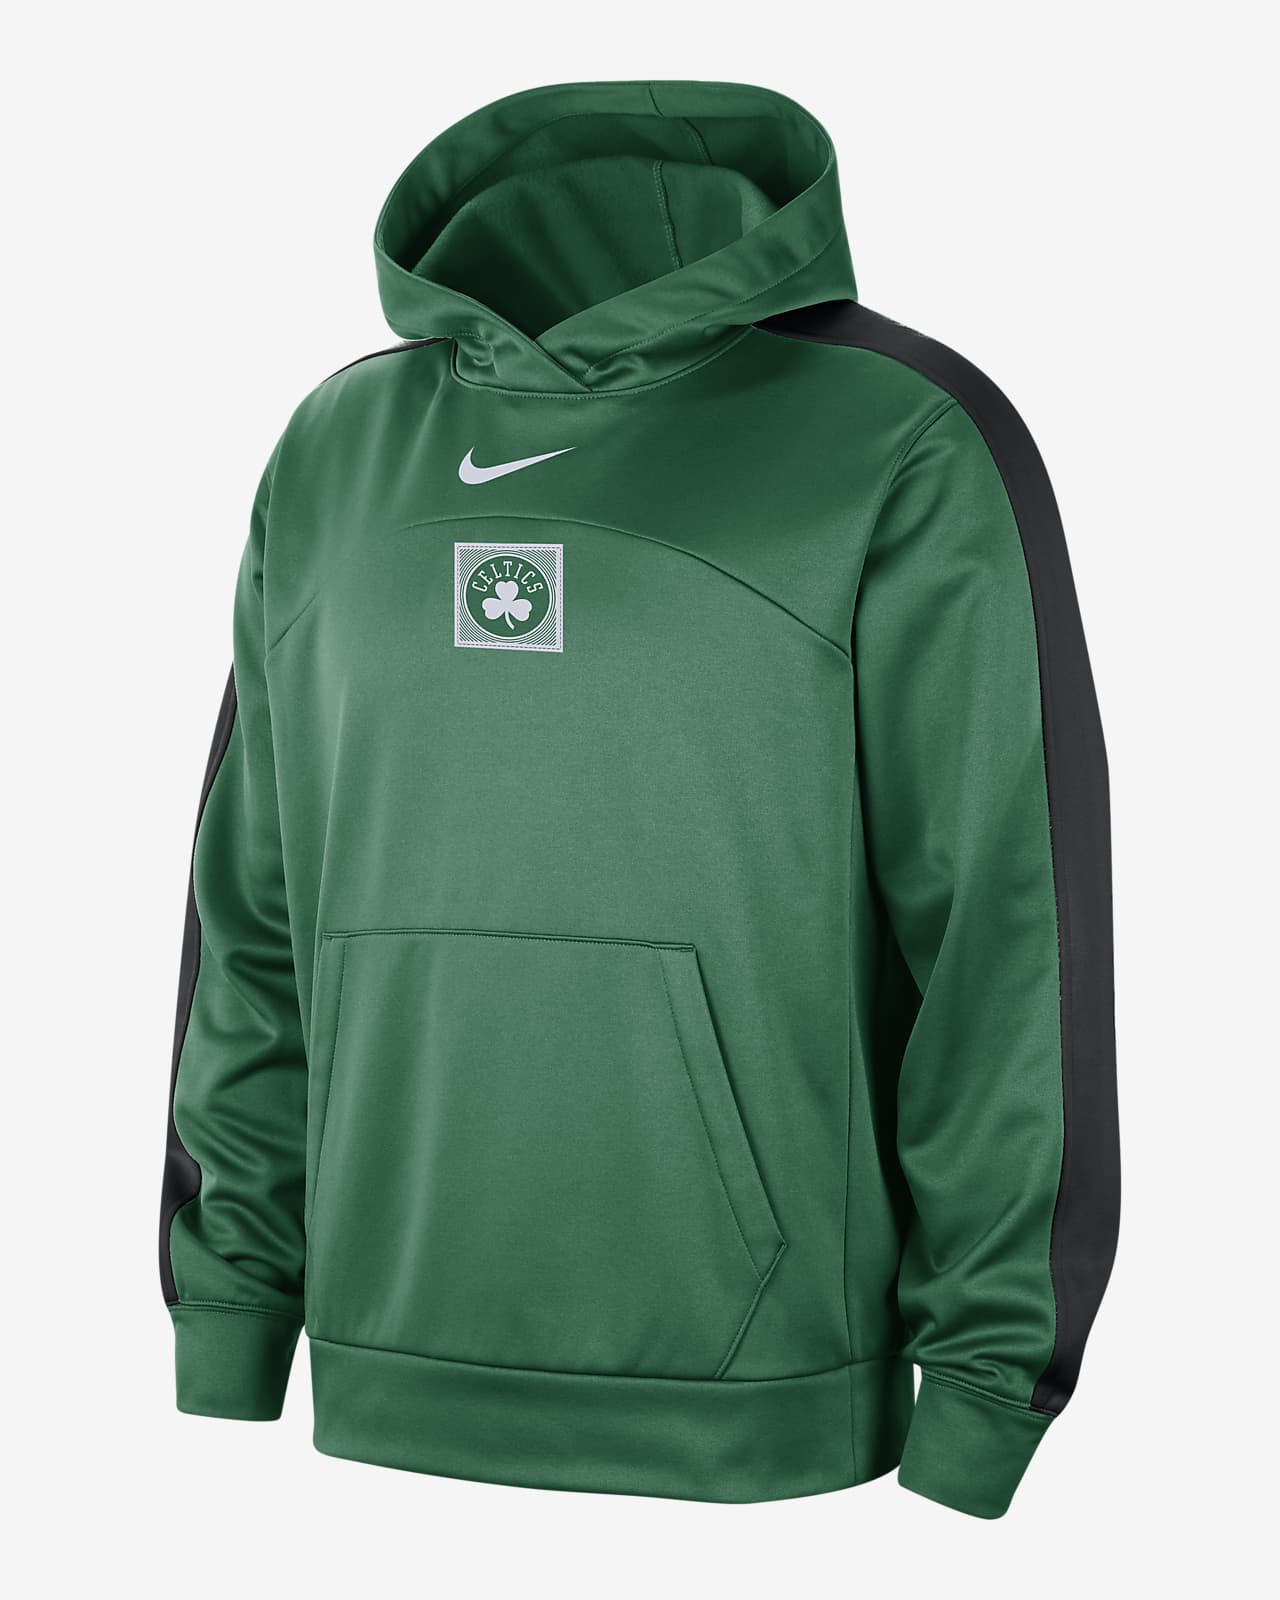 Nike Men's Boston Celtics Black Standard Issue Hoodie, Large